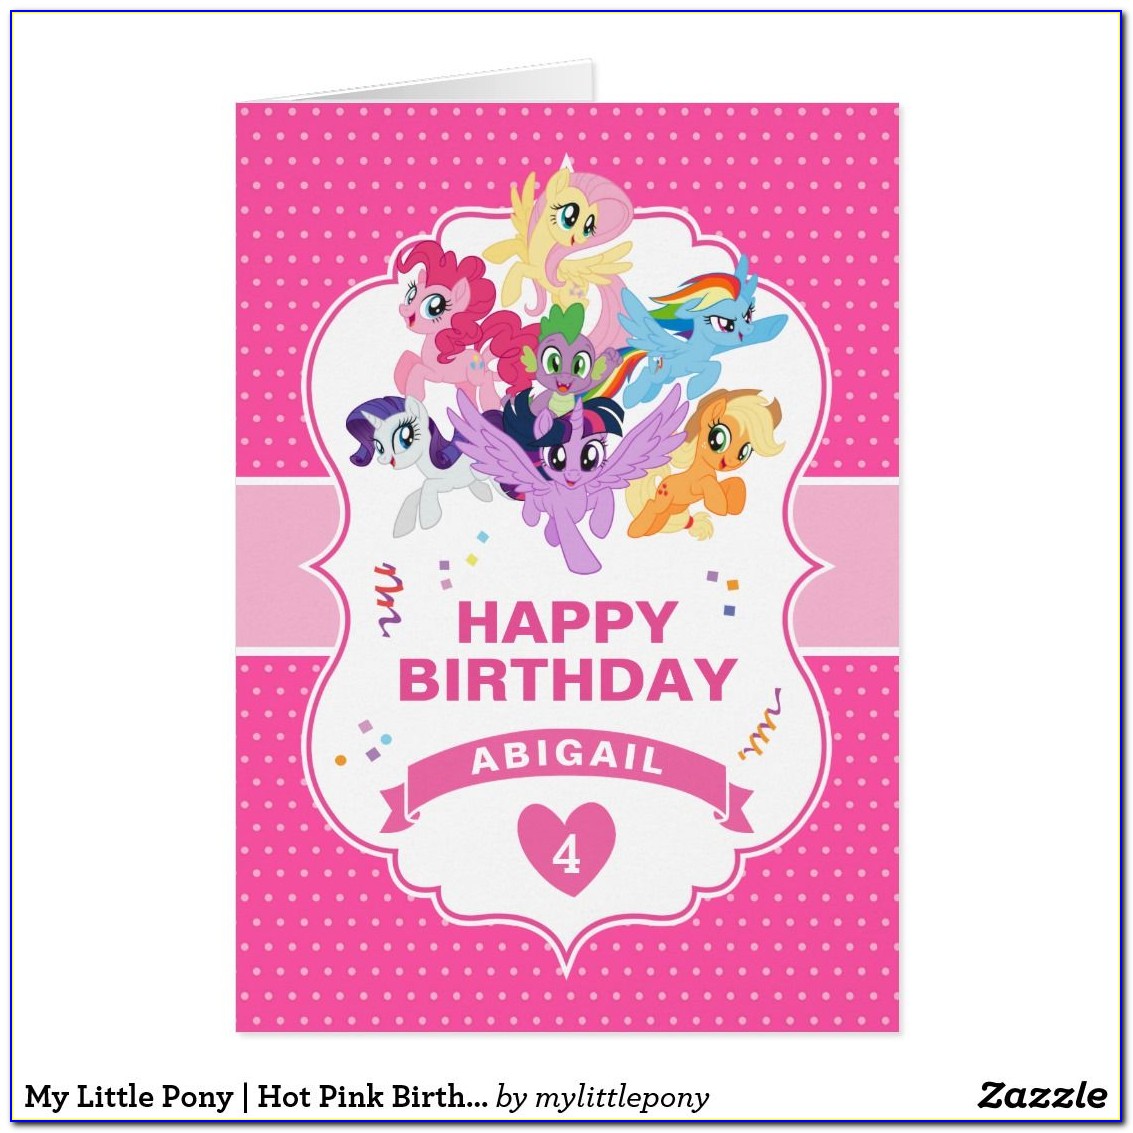 My Little Pony Birthday Cards To Print